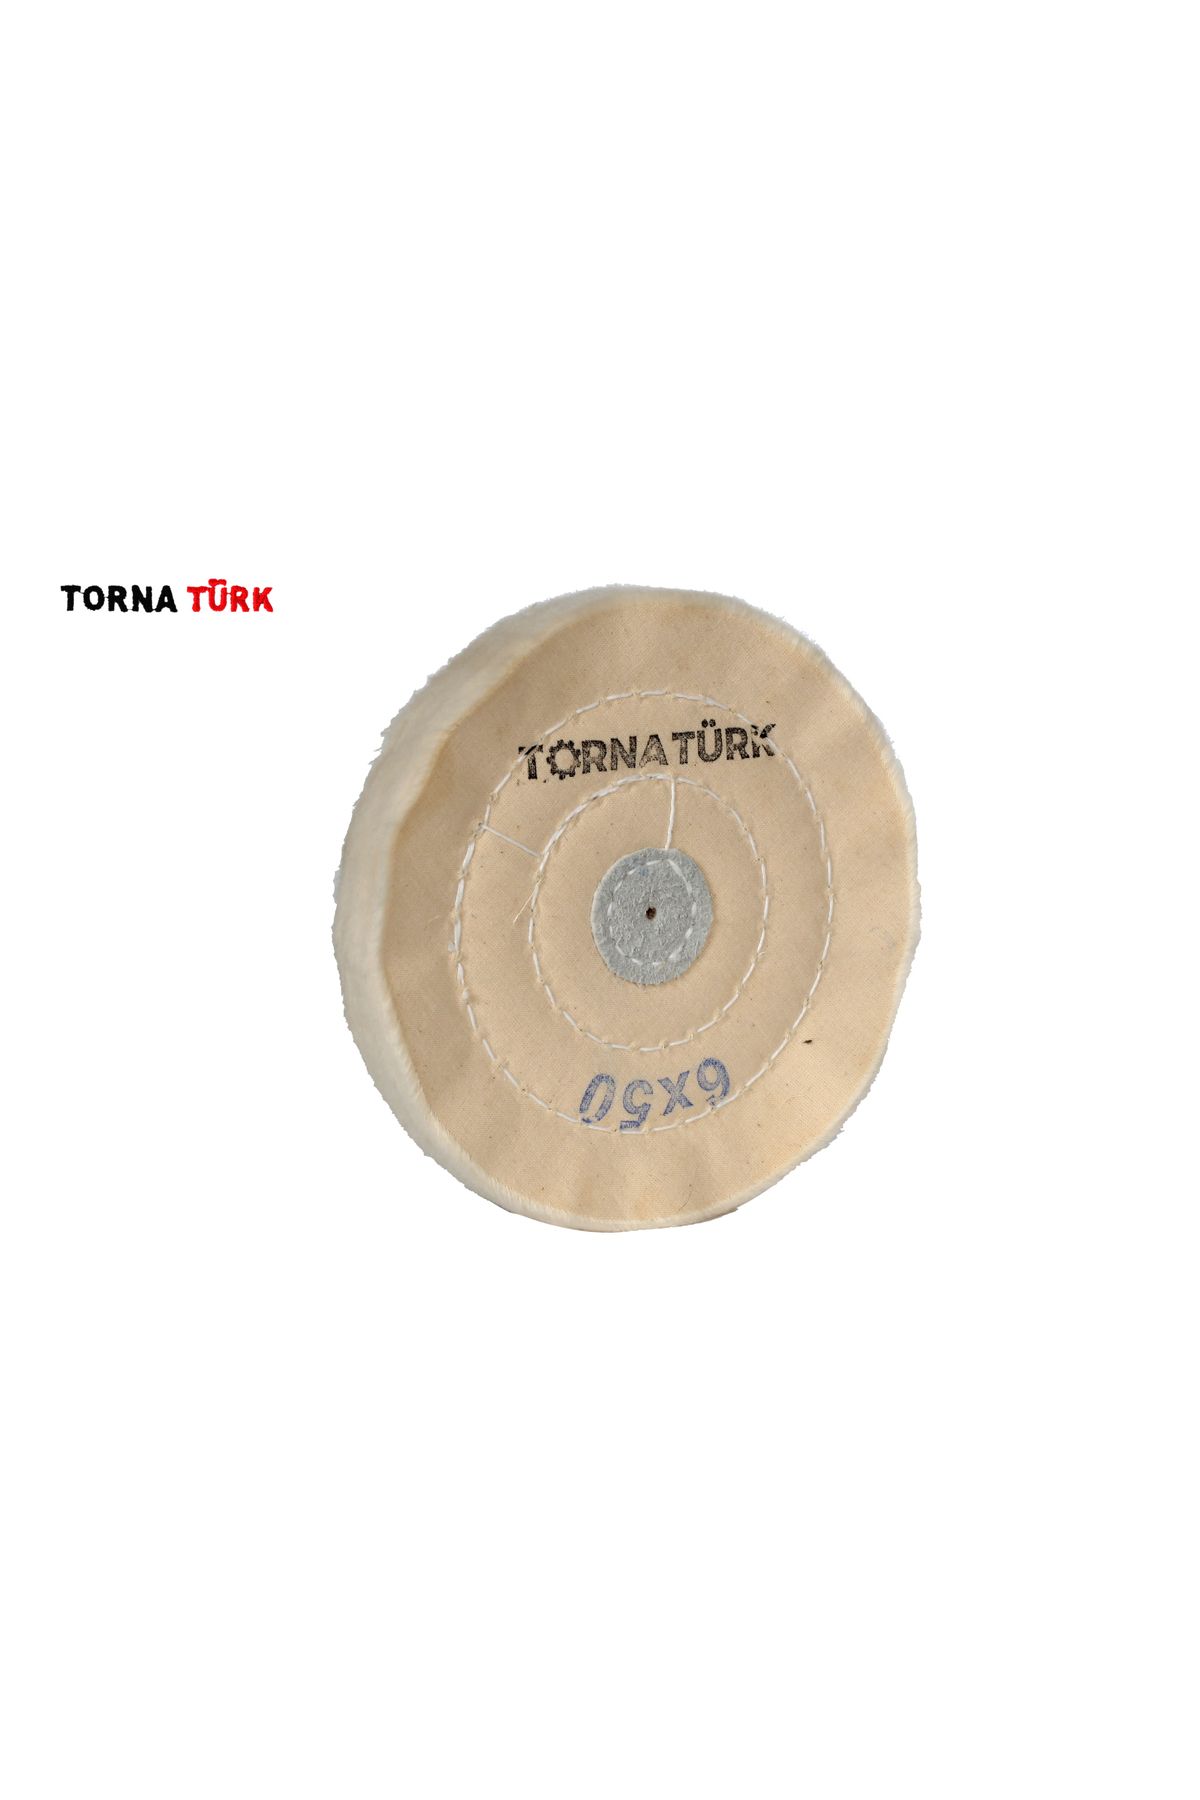 Torna Türk 3x50 - 3 inç polisaj keçesi (60 mm) extra shine